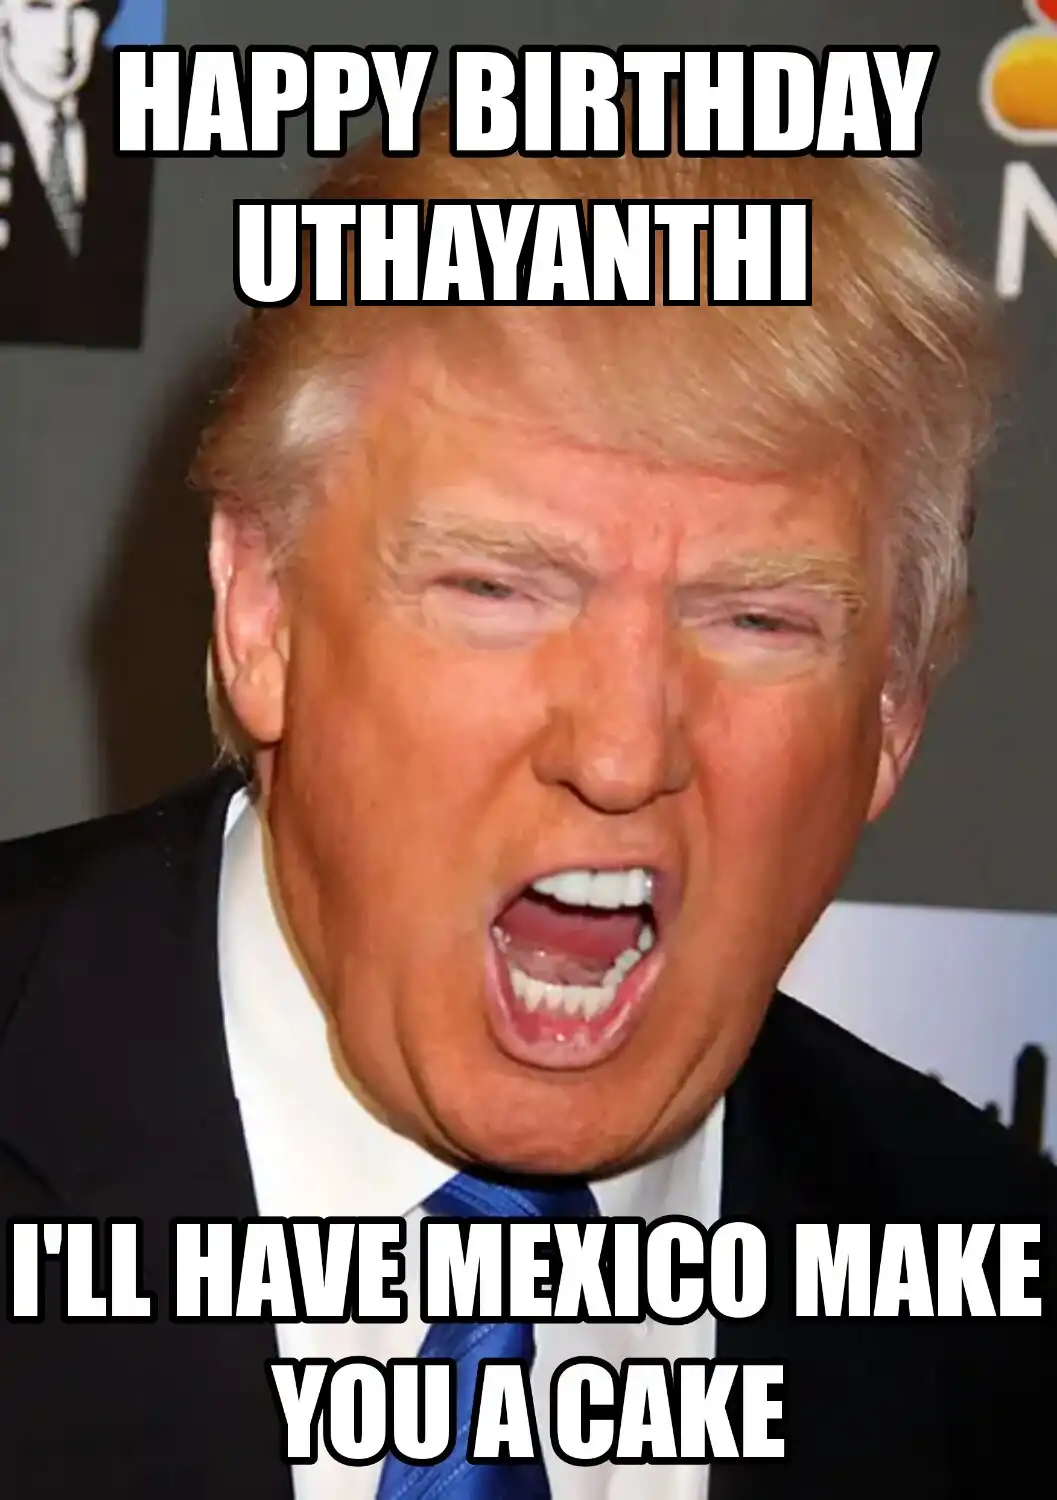 Happy Birthday Uthayanthi Mexico Make You A Cake Meme